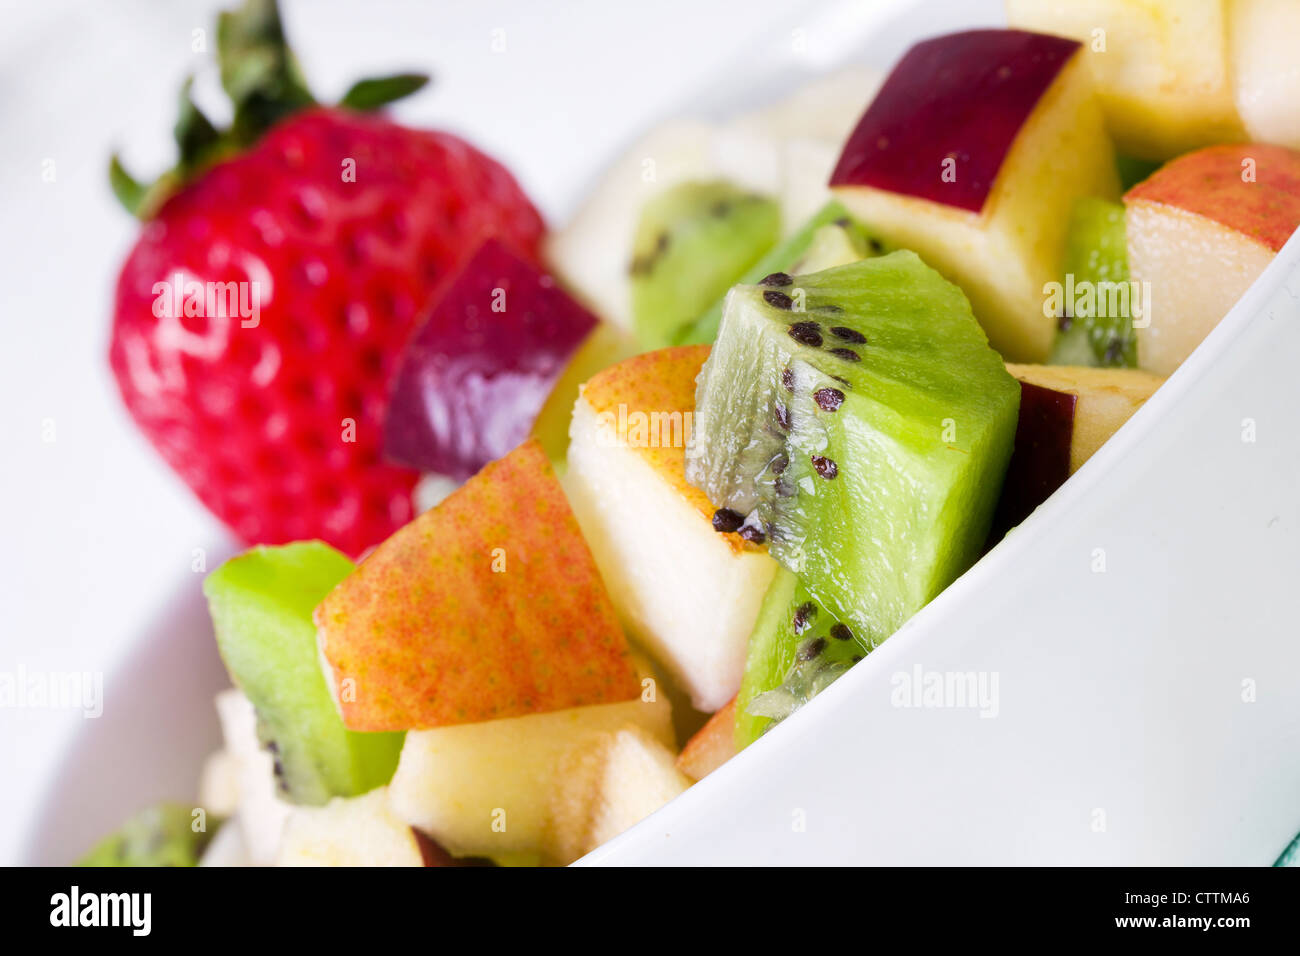 Fruit salad in plate, closeup Stock Photo